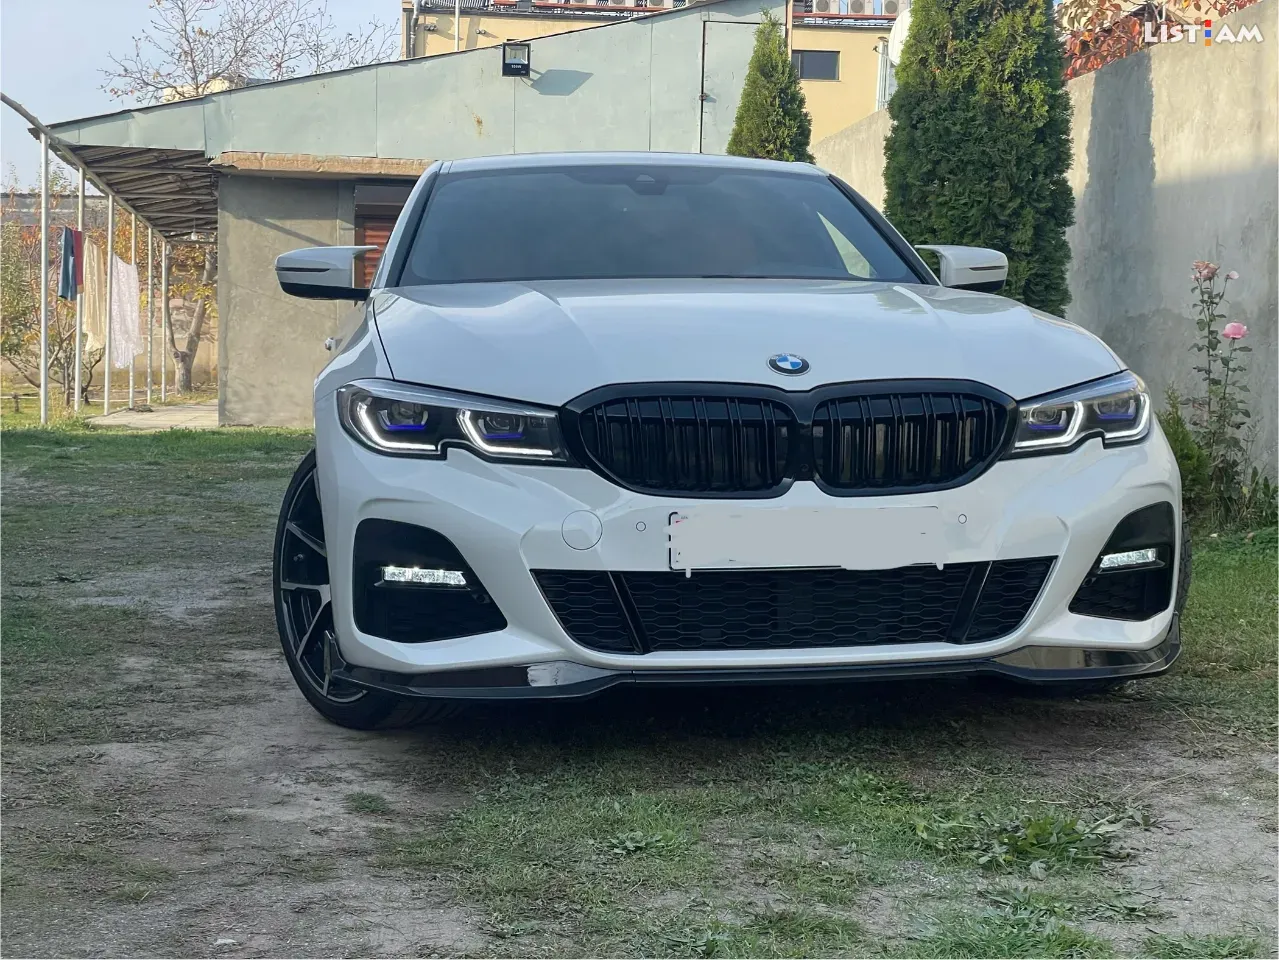 BMW 3 Series, 2.0 л., 2019 г. - Автомобили - List.am